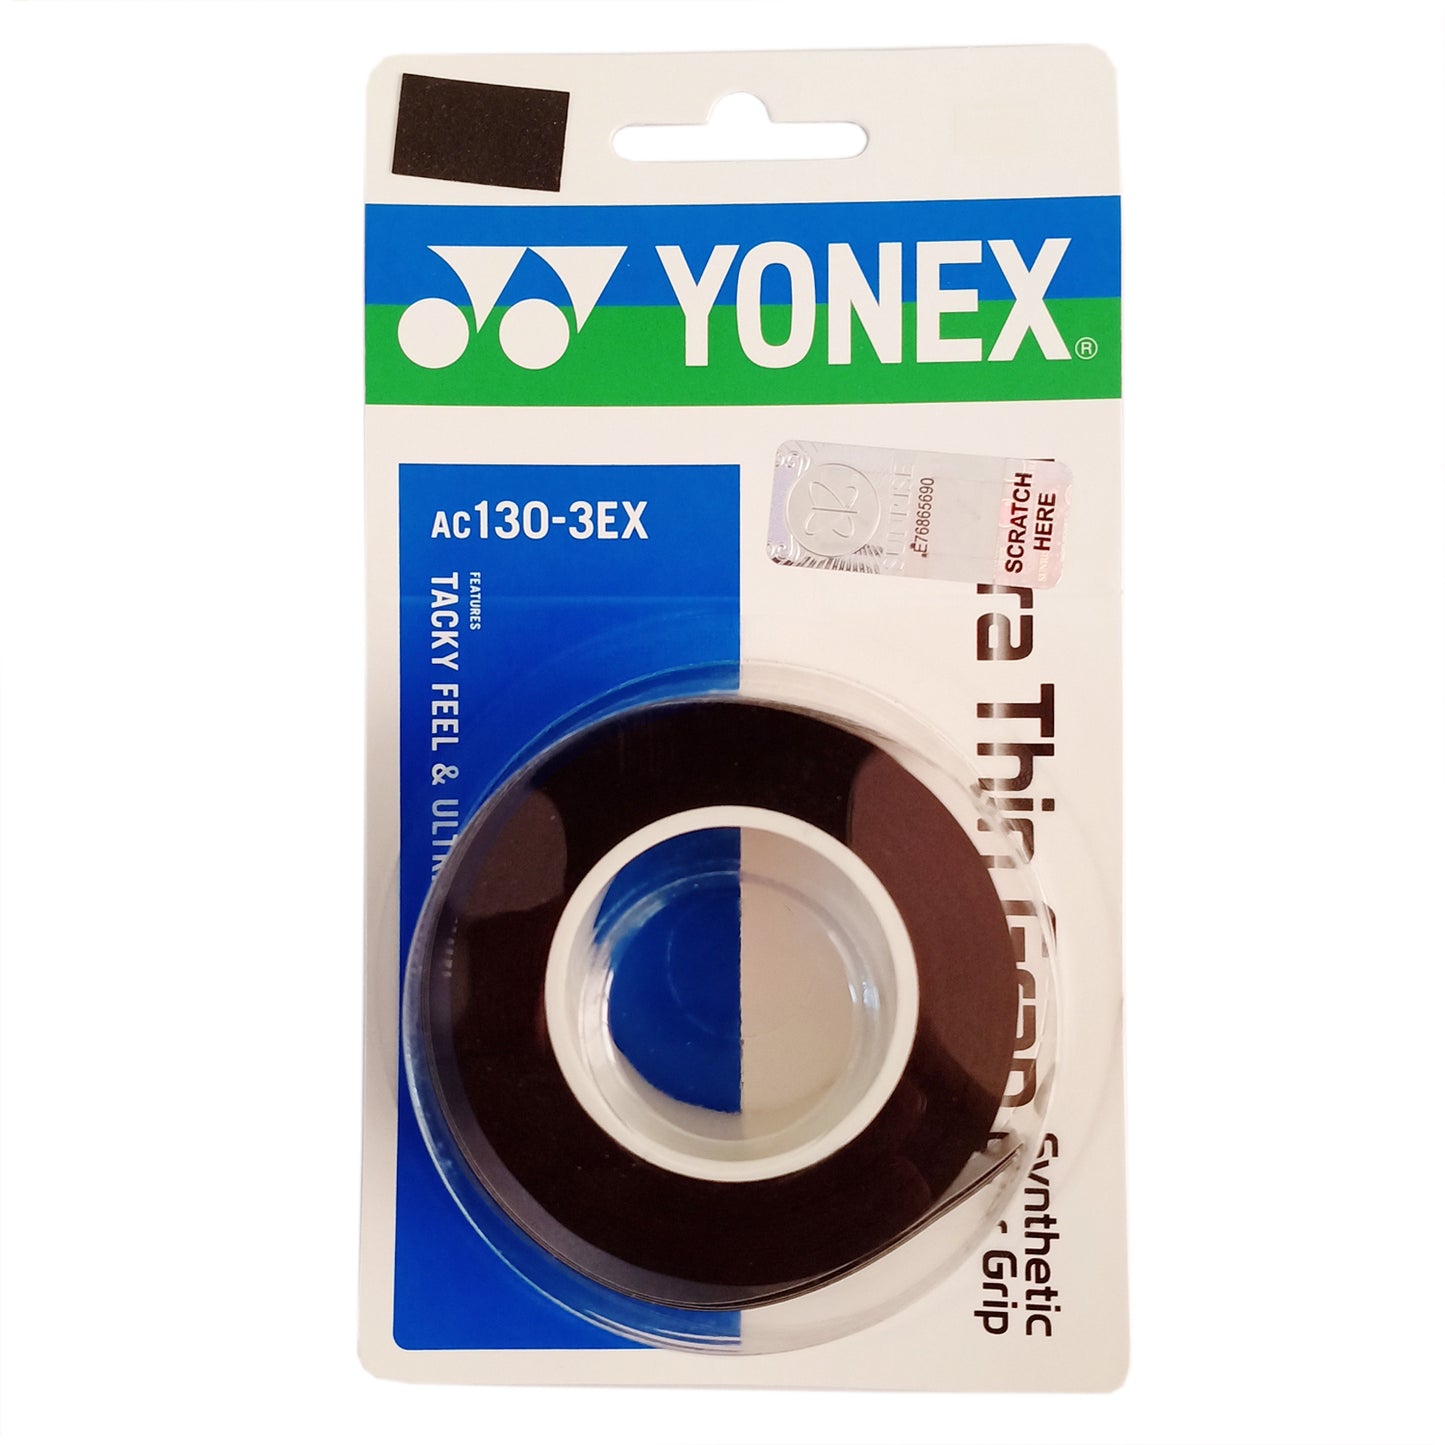 Yonex AC130-3EX Ultra Thin GRAP Synthetic Badminton Over Grip - Best Price online Prokicksports.com